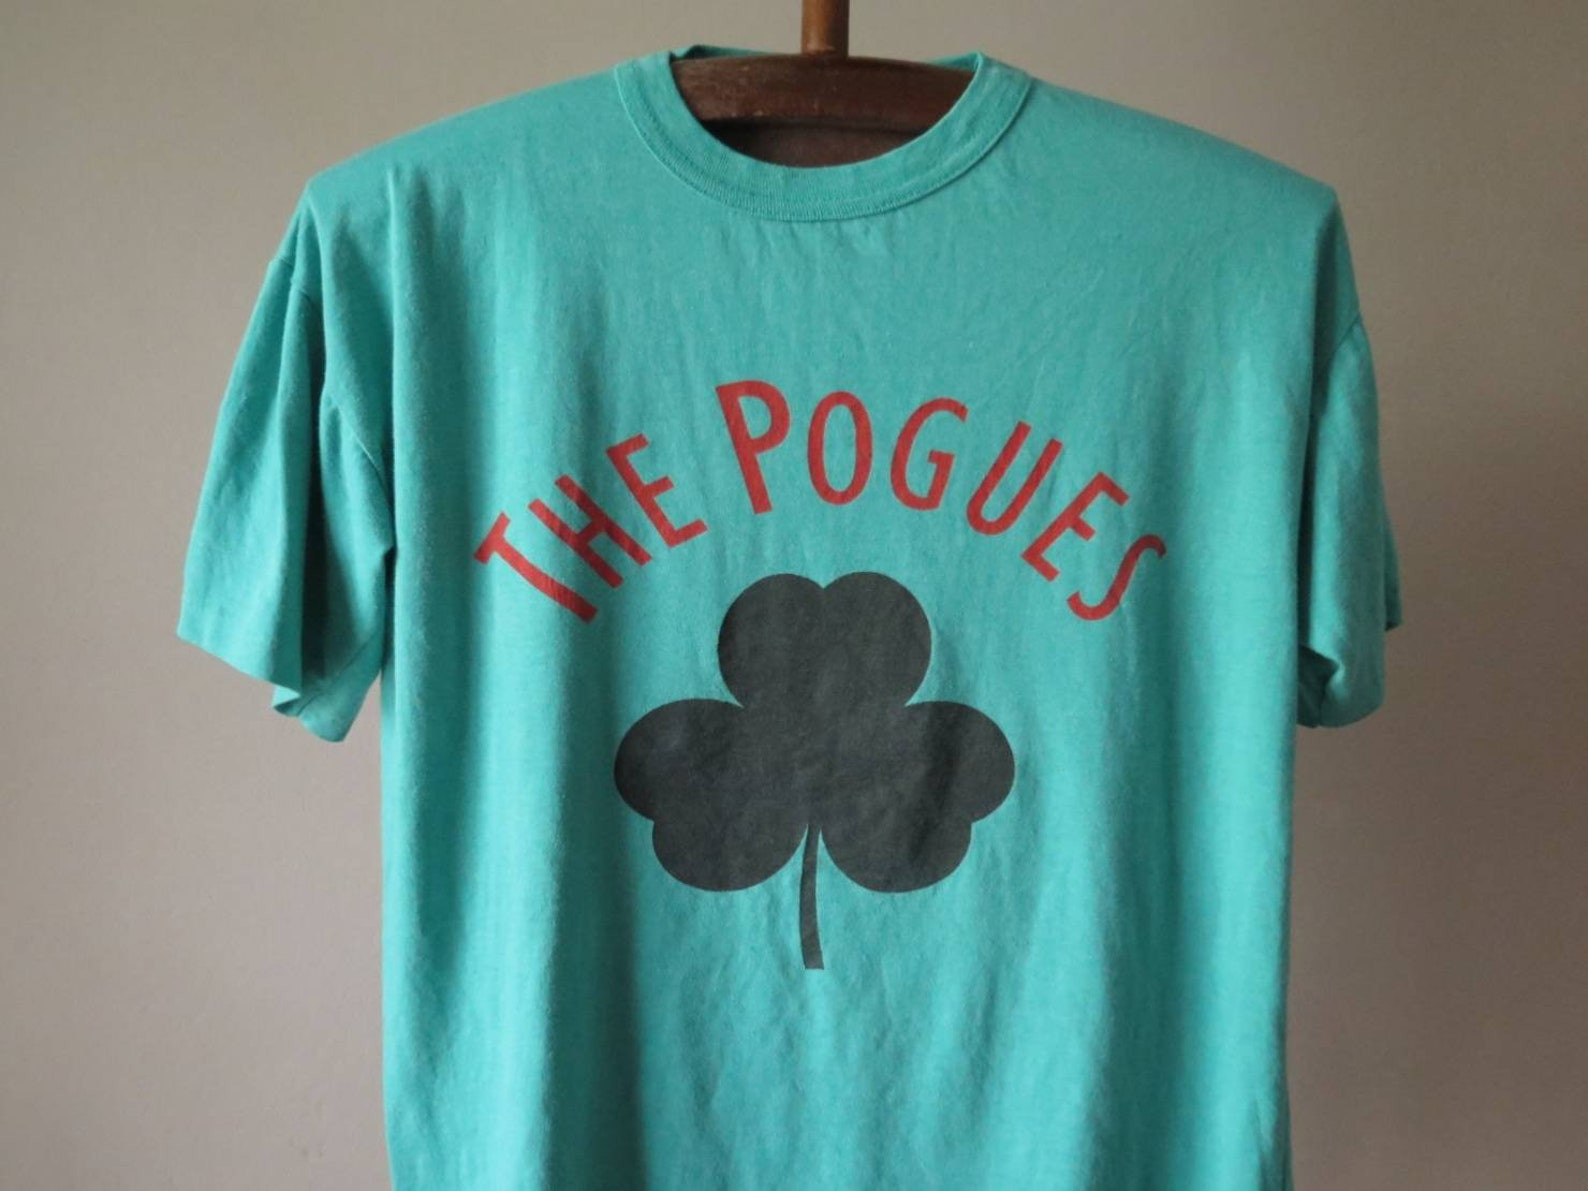 Vintage The Pogues T Shirt The Pogues Band Punk Rock T Shirt Folk Punk Shane Macgowan Rare Vintage Music Tee 80S